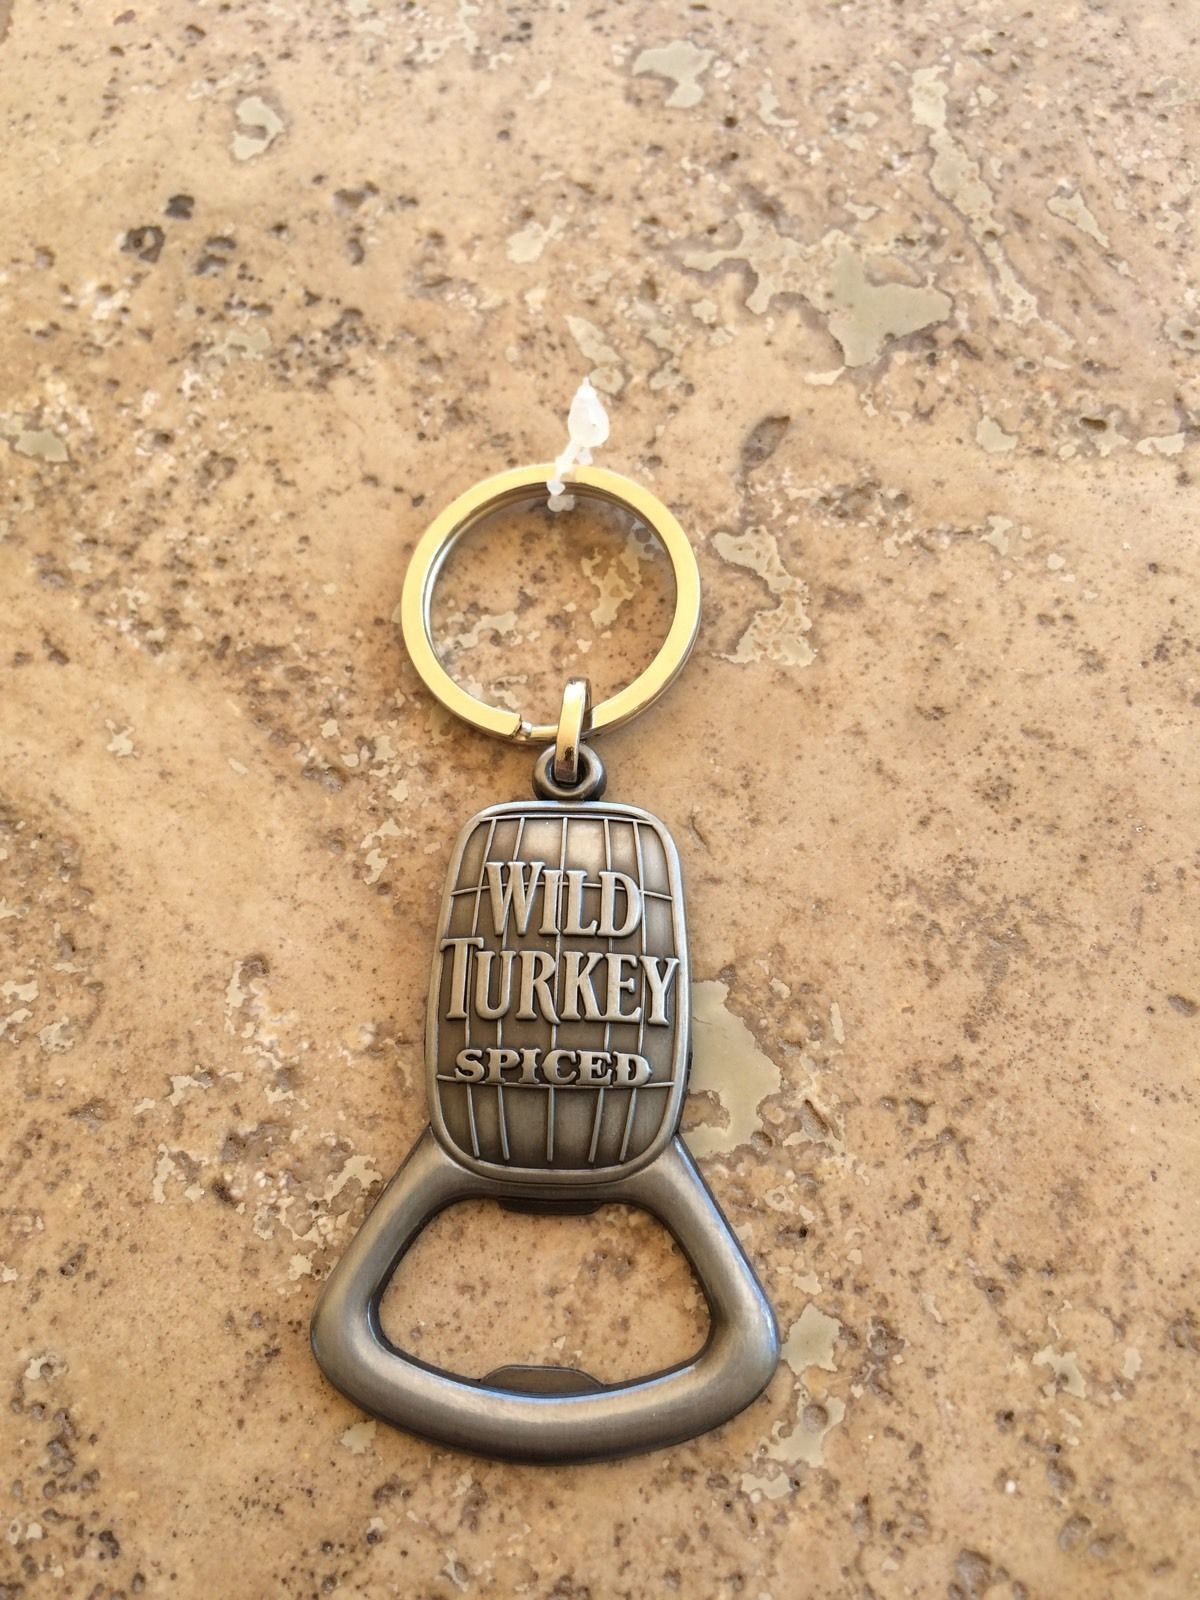 Wild Turkey Spiced Whiskey Key Chain Bottle Opener Brand New! - £5.46 GBP